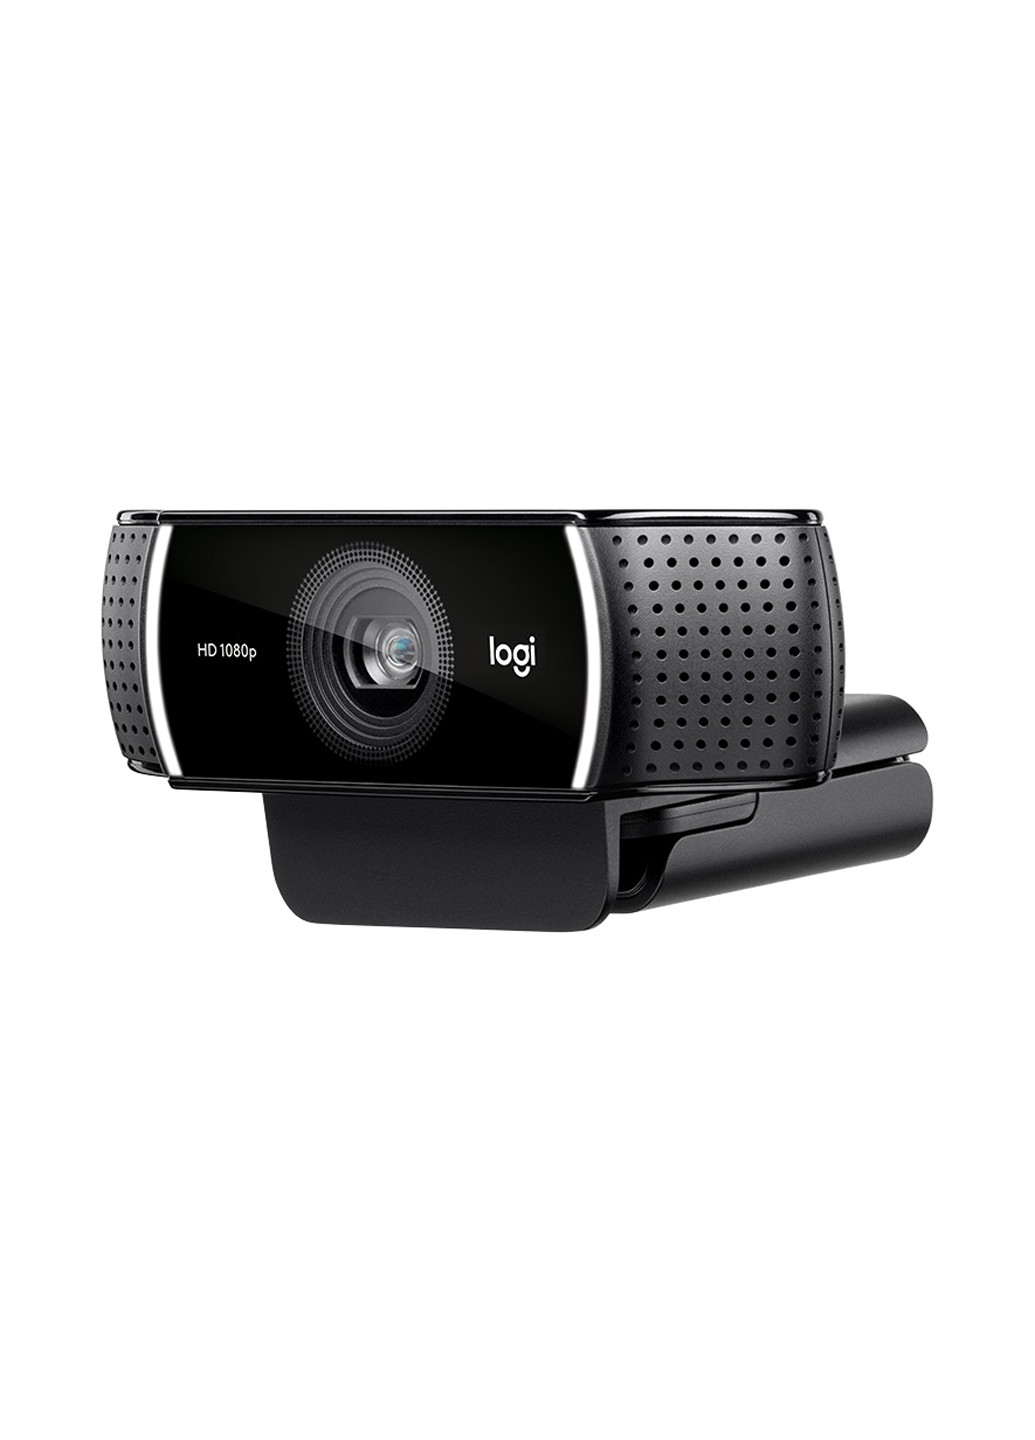 Веб-камера Webcam C922 Pro Stream Webcam - EMEA (V5L960001088) Logitech webcam c922 pro stream webcam - emea (v5l960001088) (l960-001088) (135463231)